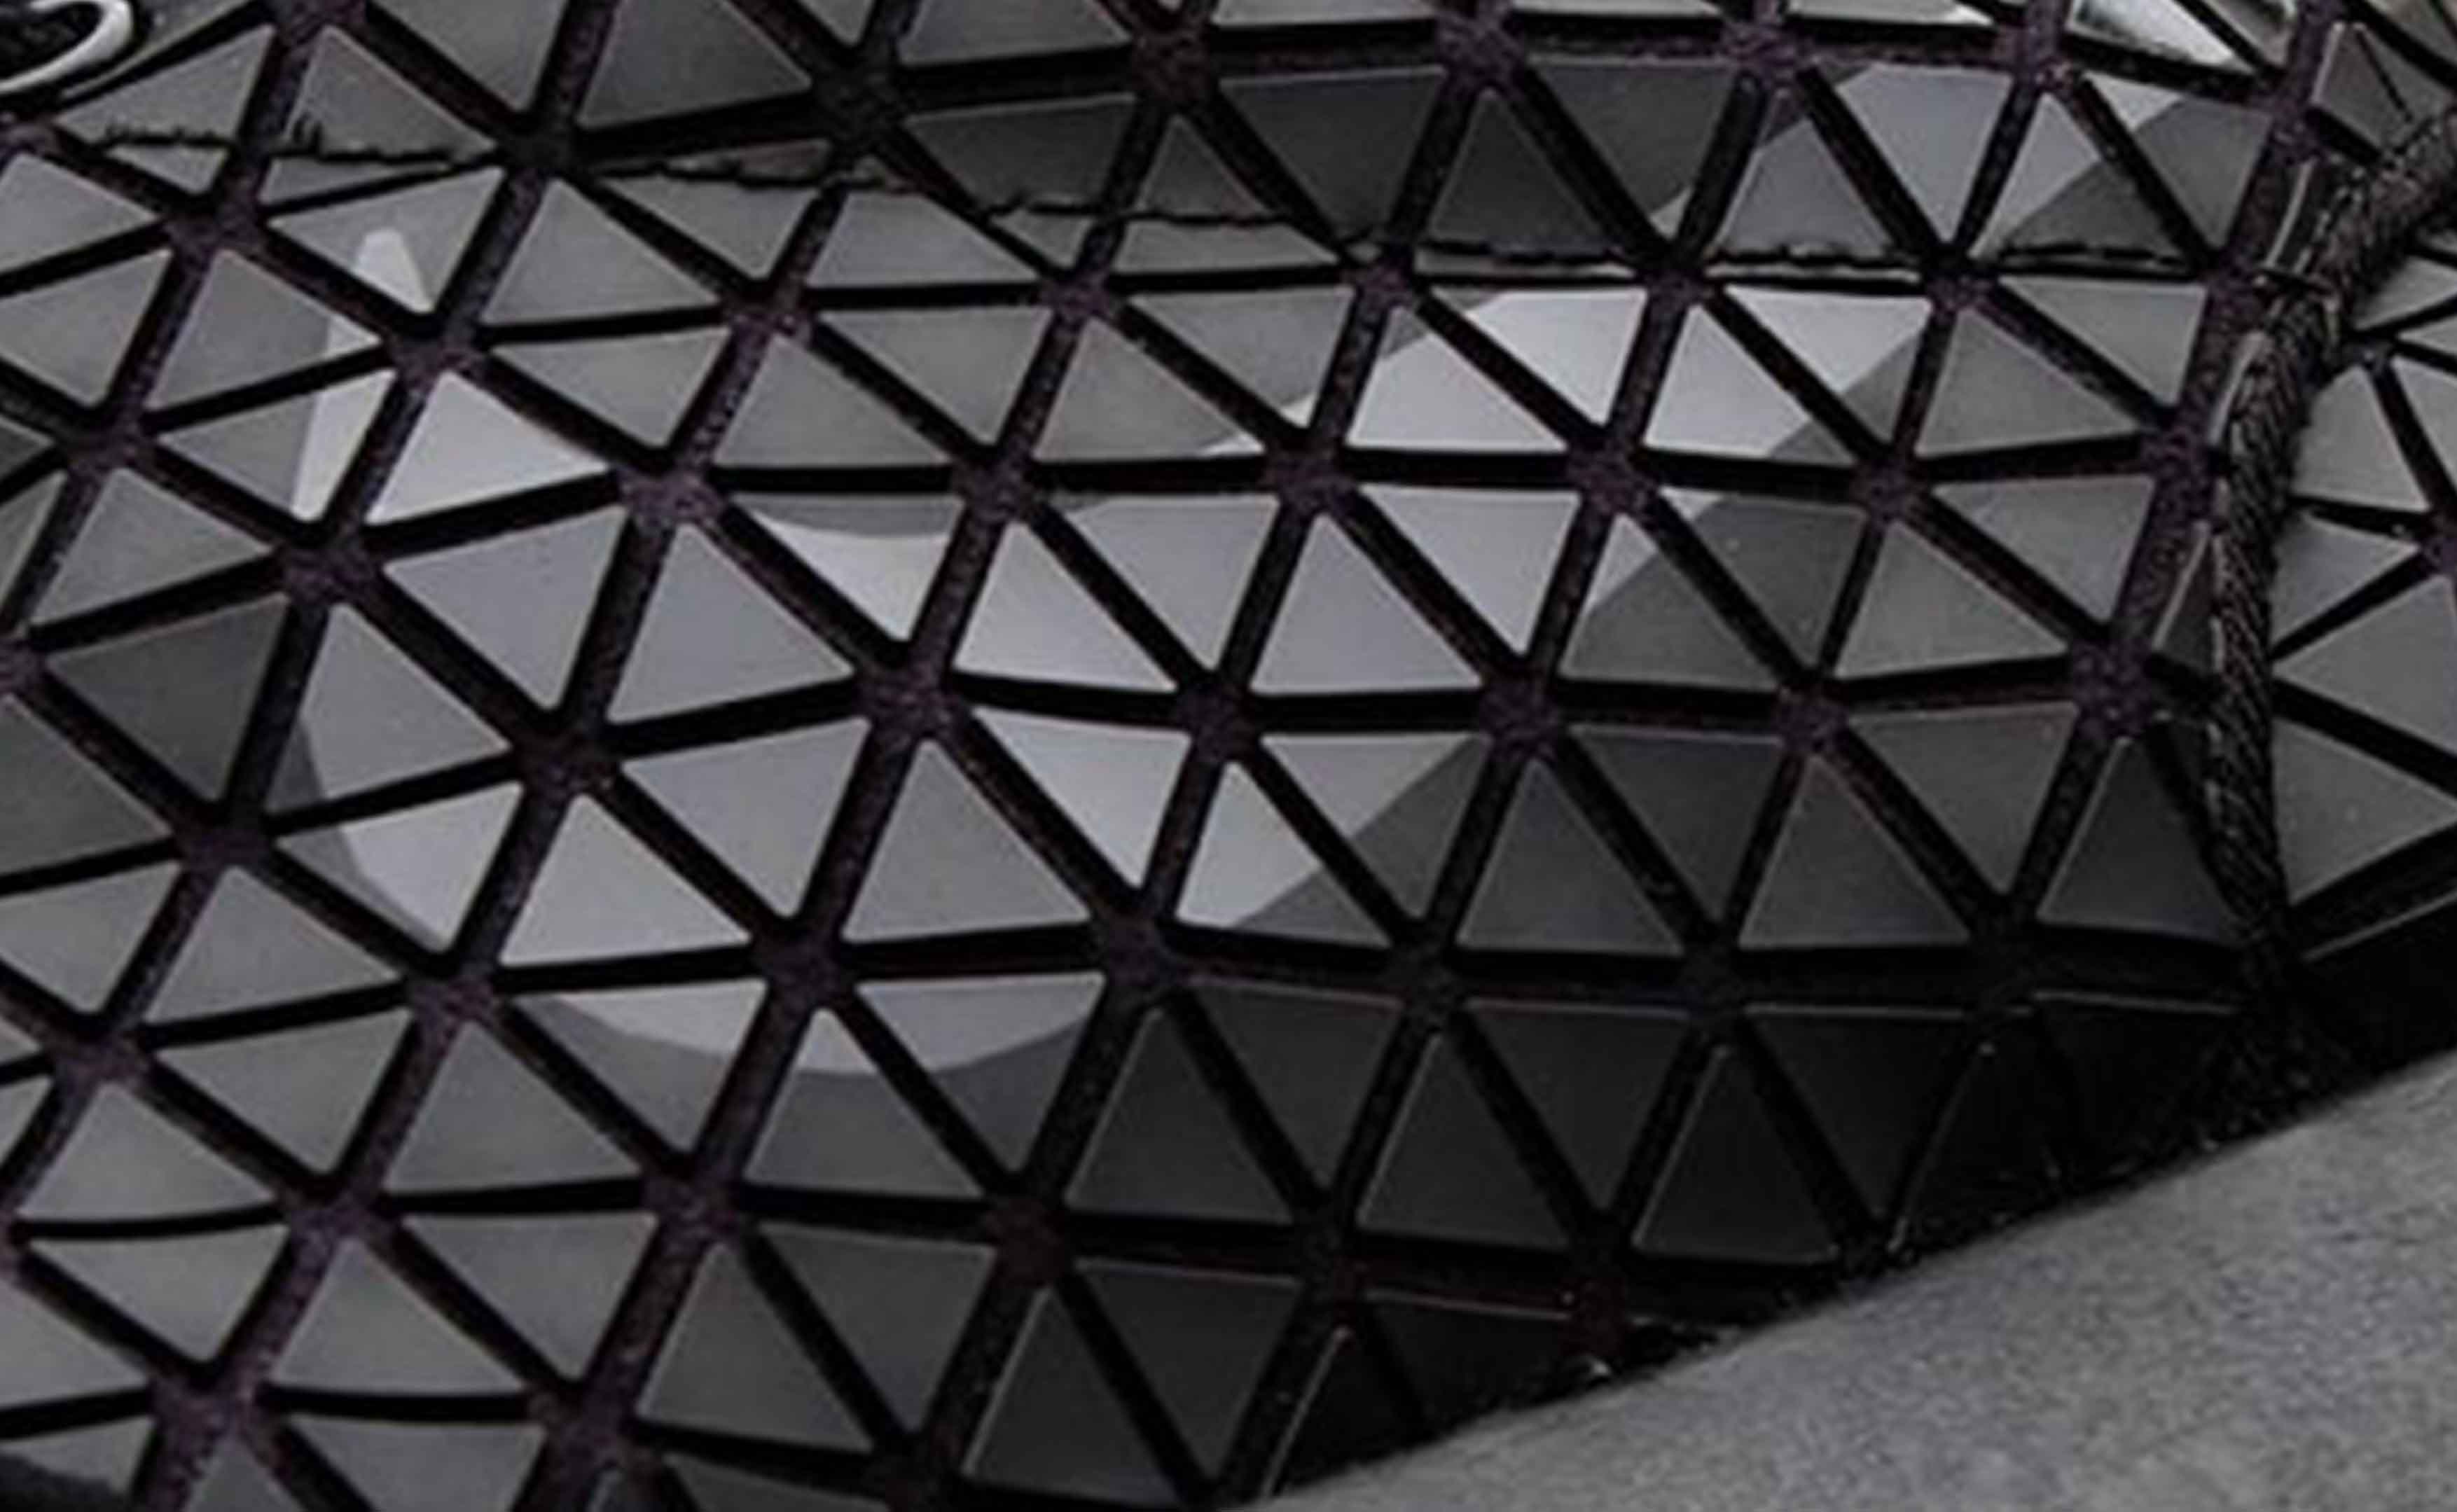 Texttile laser cut pattern